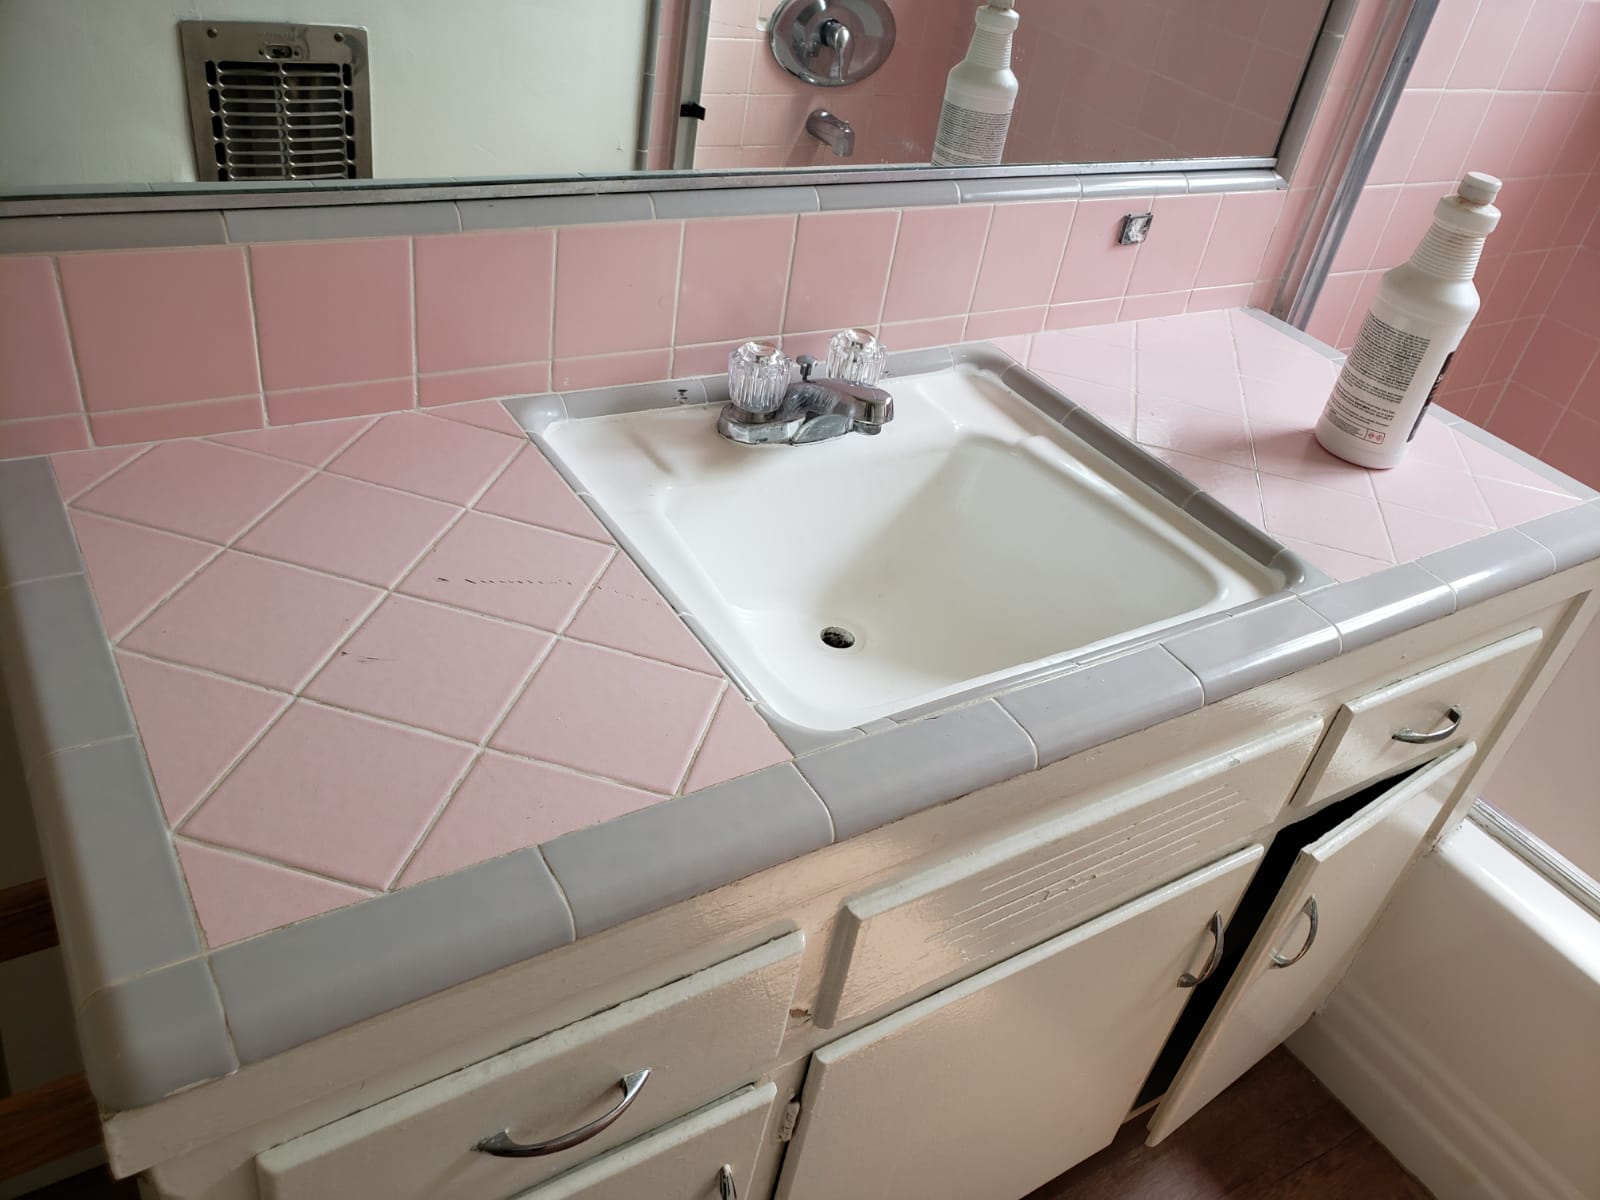 Tile Bathroom Counter Before Refinishing | Mission Hills, CA | Julian's Porcelain & Fiberglass Expert